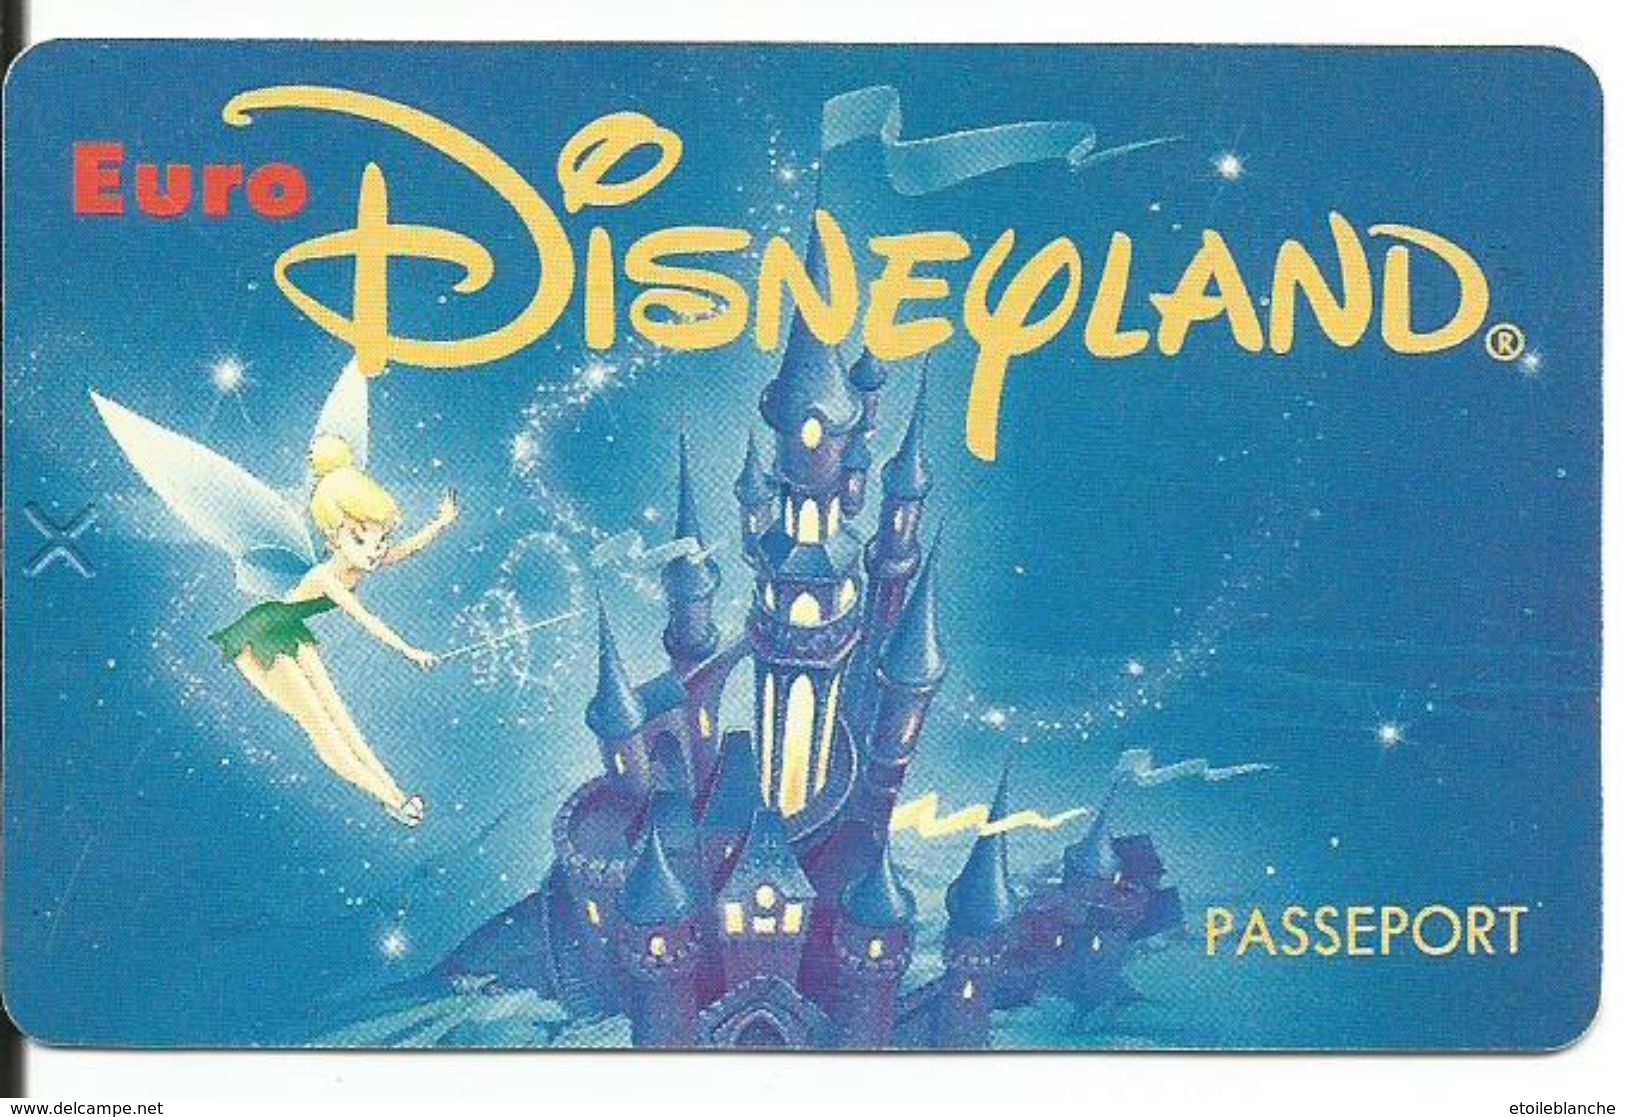 Cursus Belofte Boekwinkel Toegangskaarten - Ticket d'entrée, parc Disneyland Paris (fée clochette)  1992 - 225 Francs (Euro Disney France)